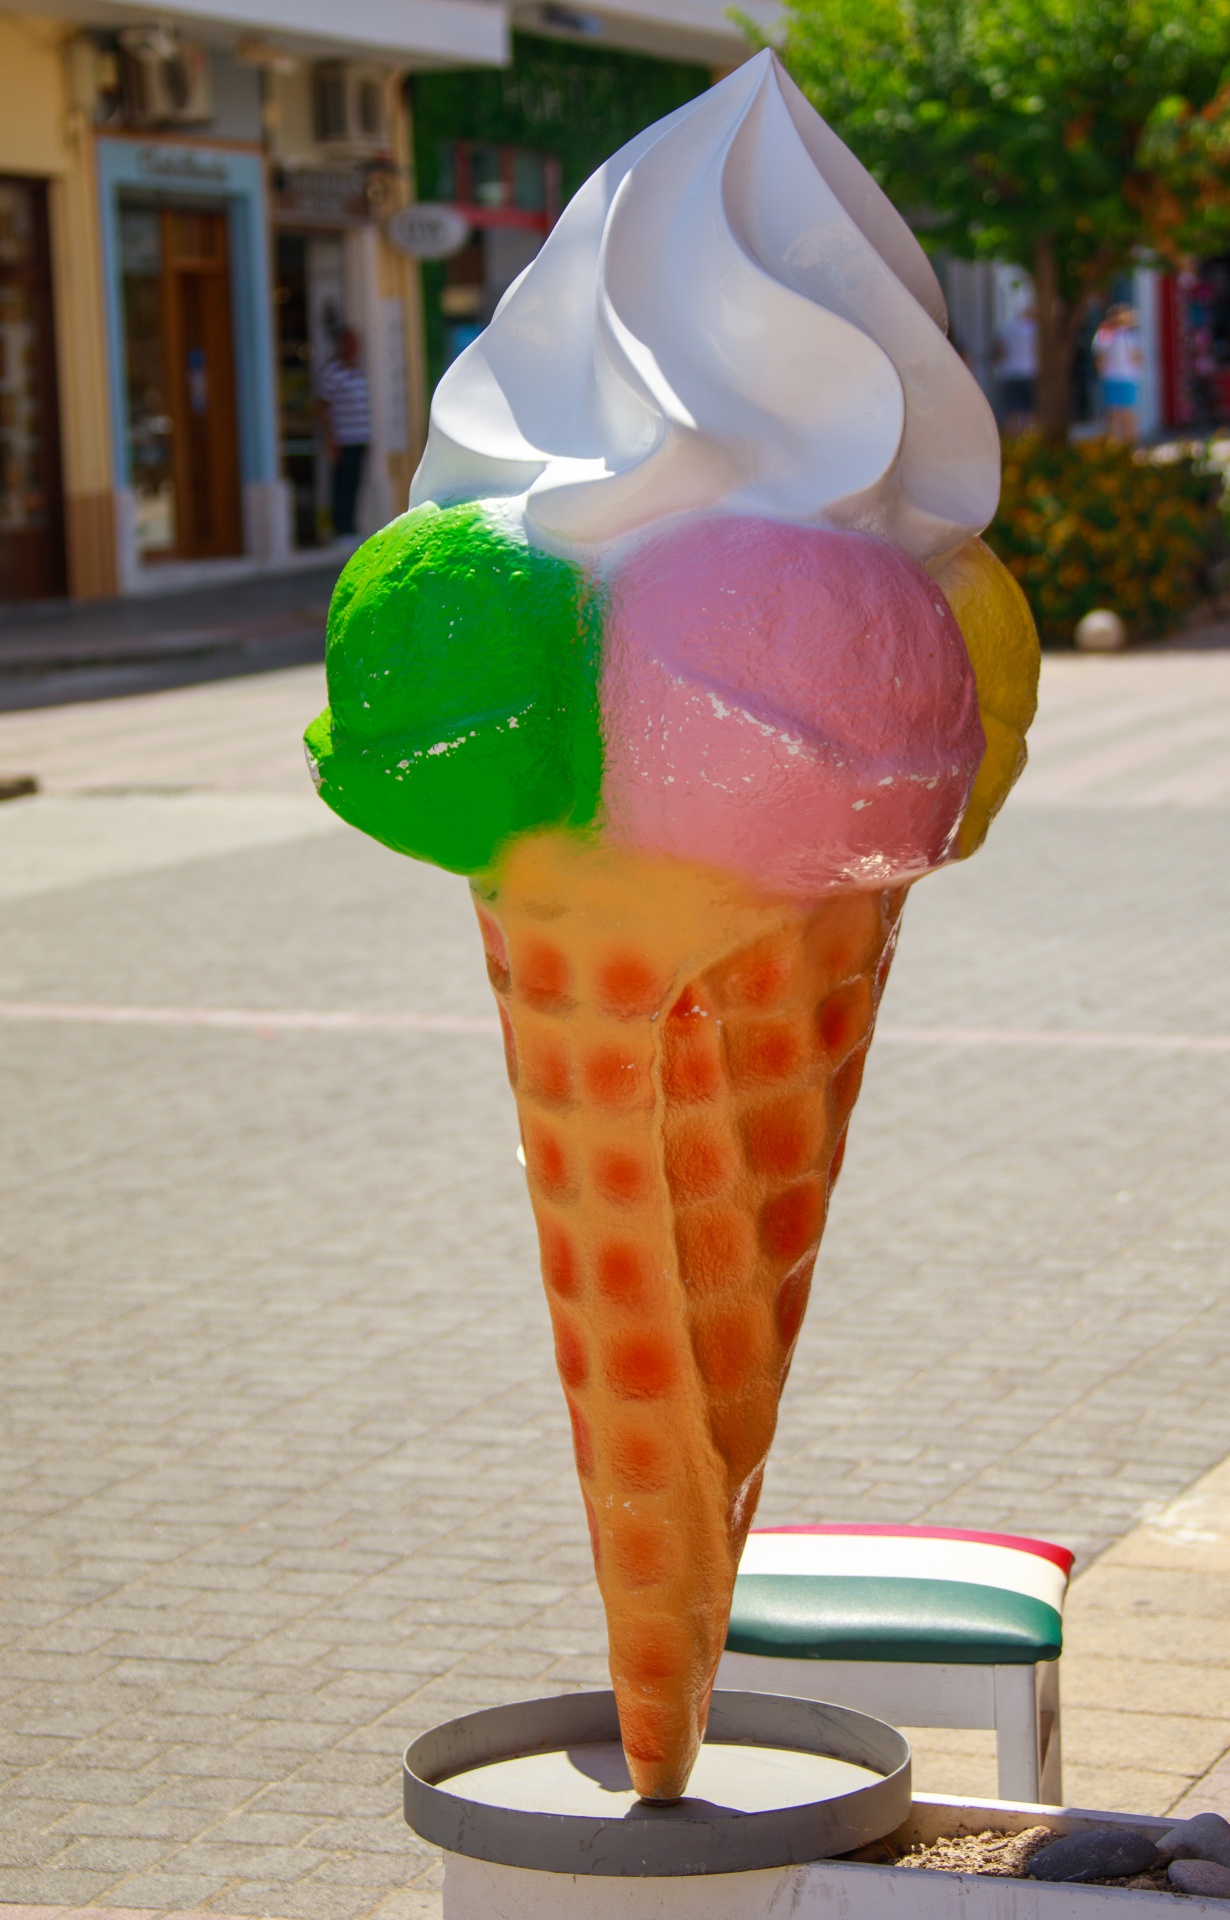 big-ice-cream-cone-sign-free-stock-photo-public-domain-pictures